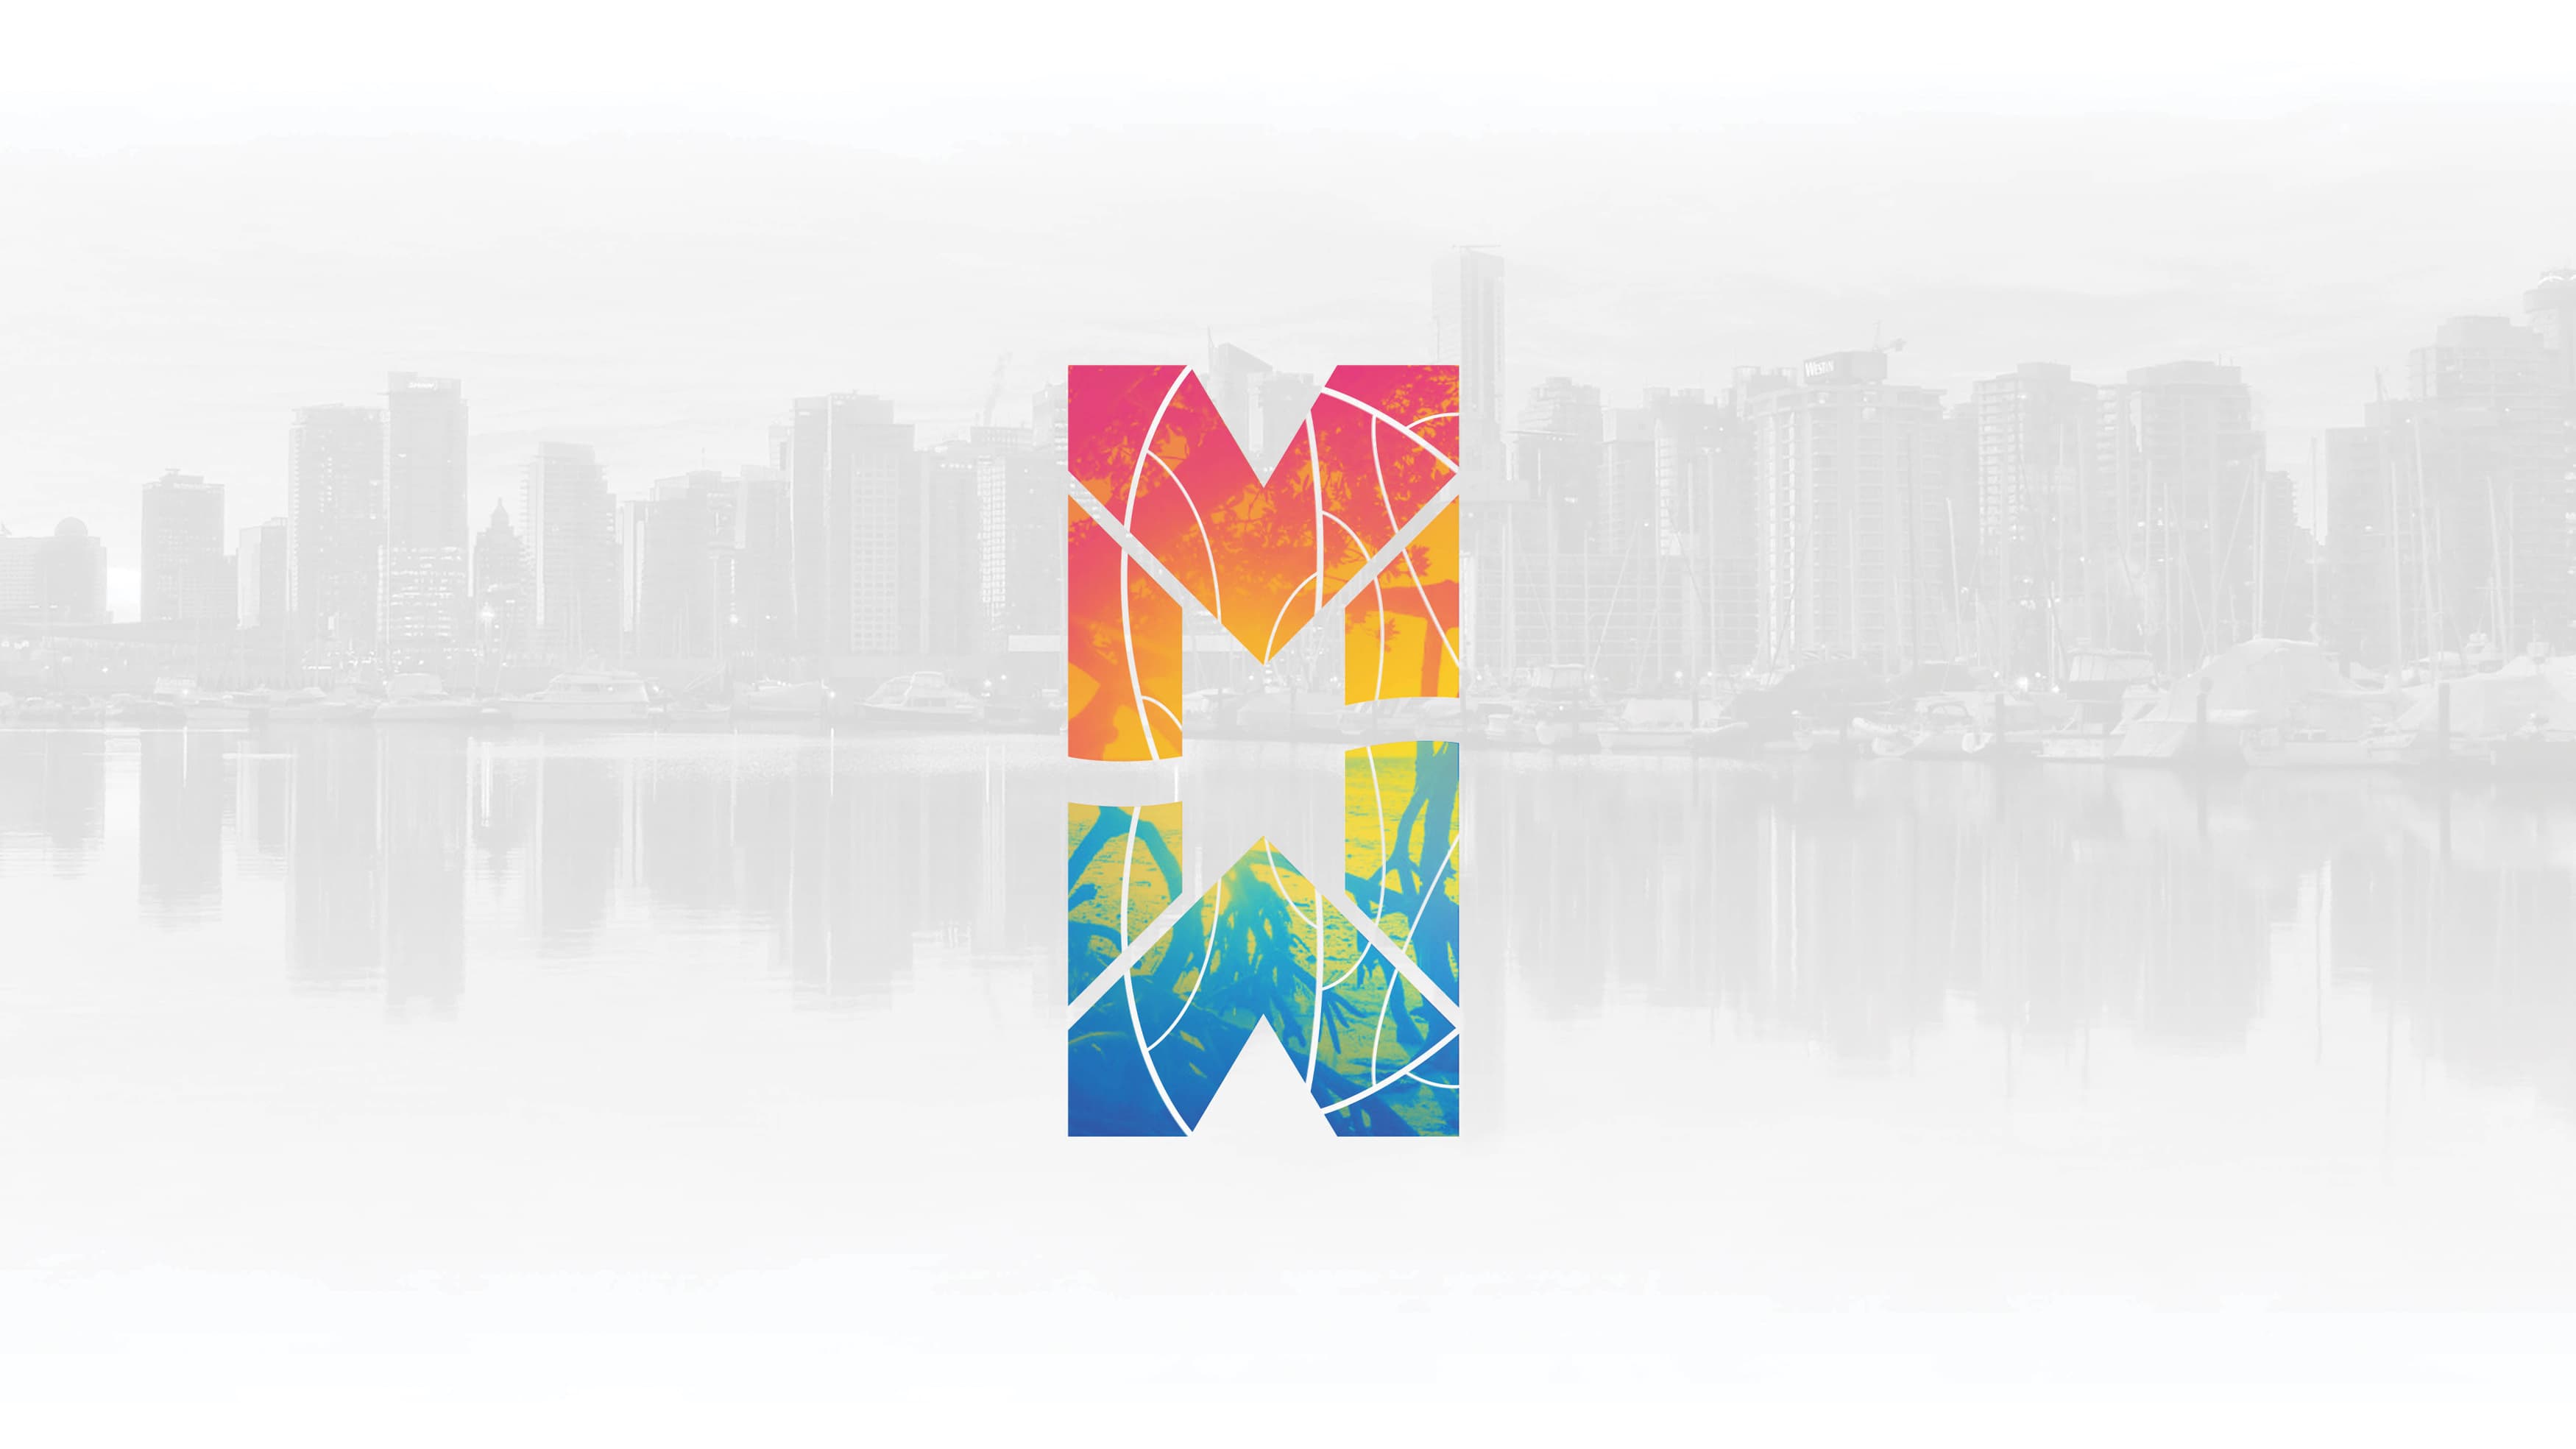 Miami Baywalk logo in multicolor on grey image background.